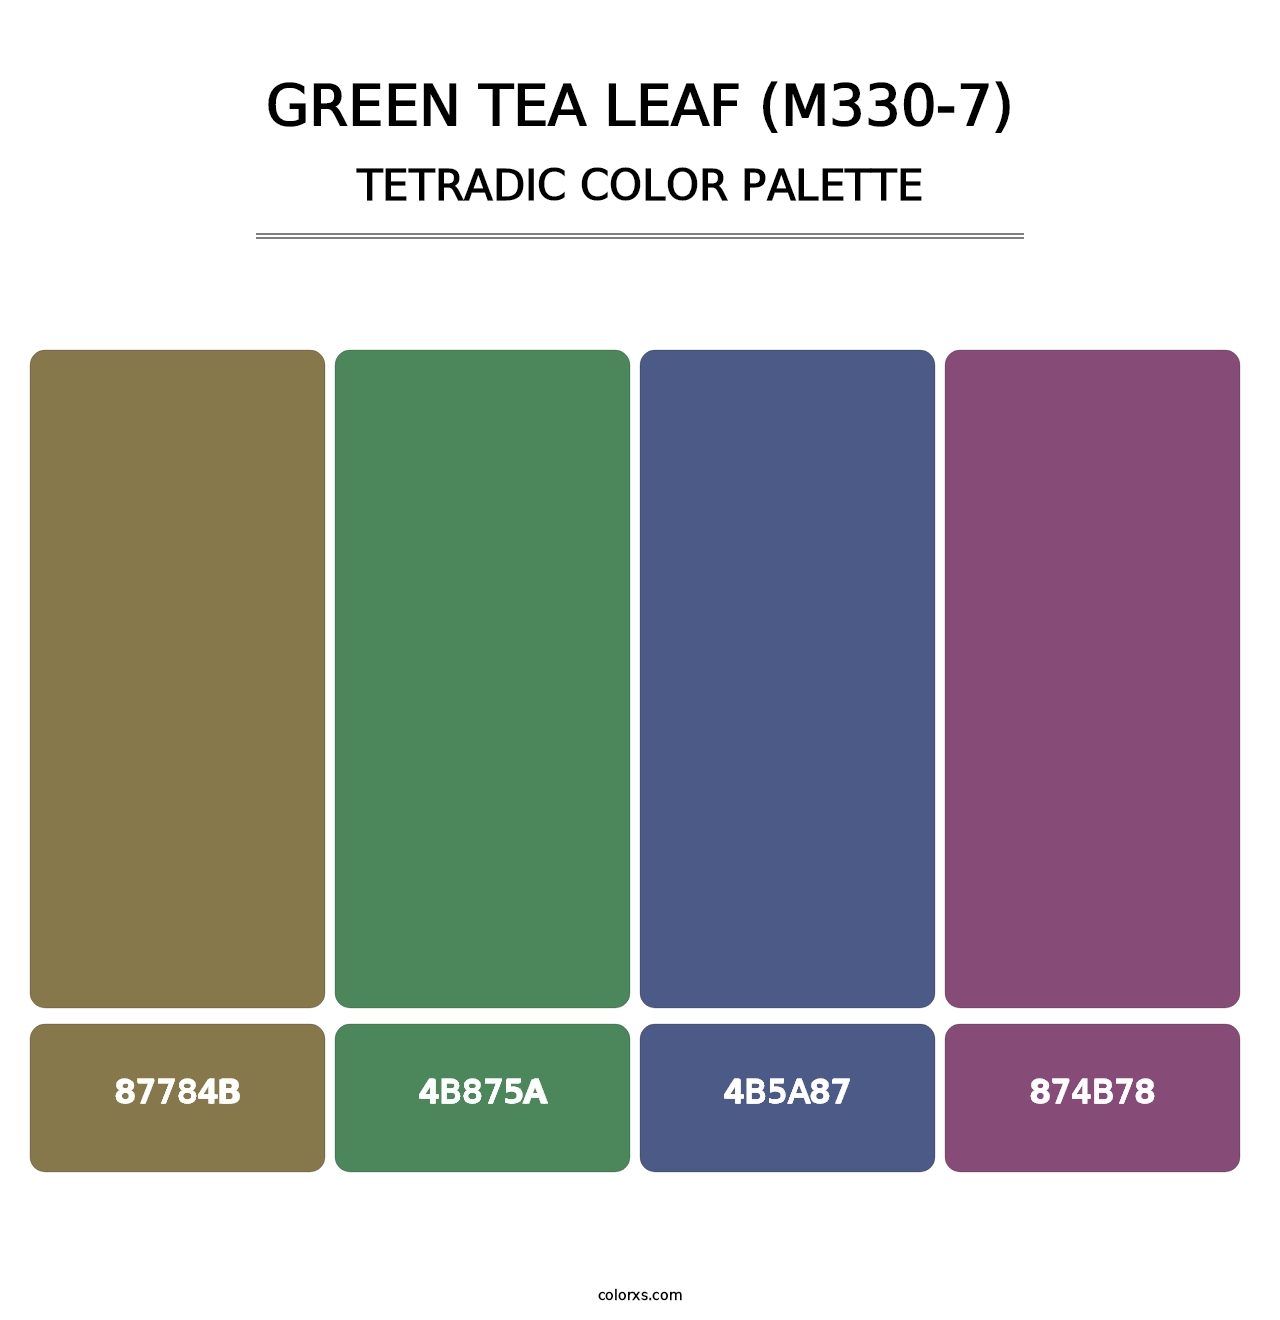 Green Tea Leaf (M330-7) - Tetradic Color Palette